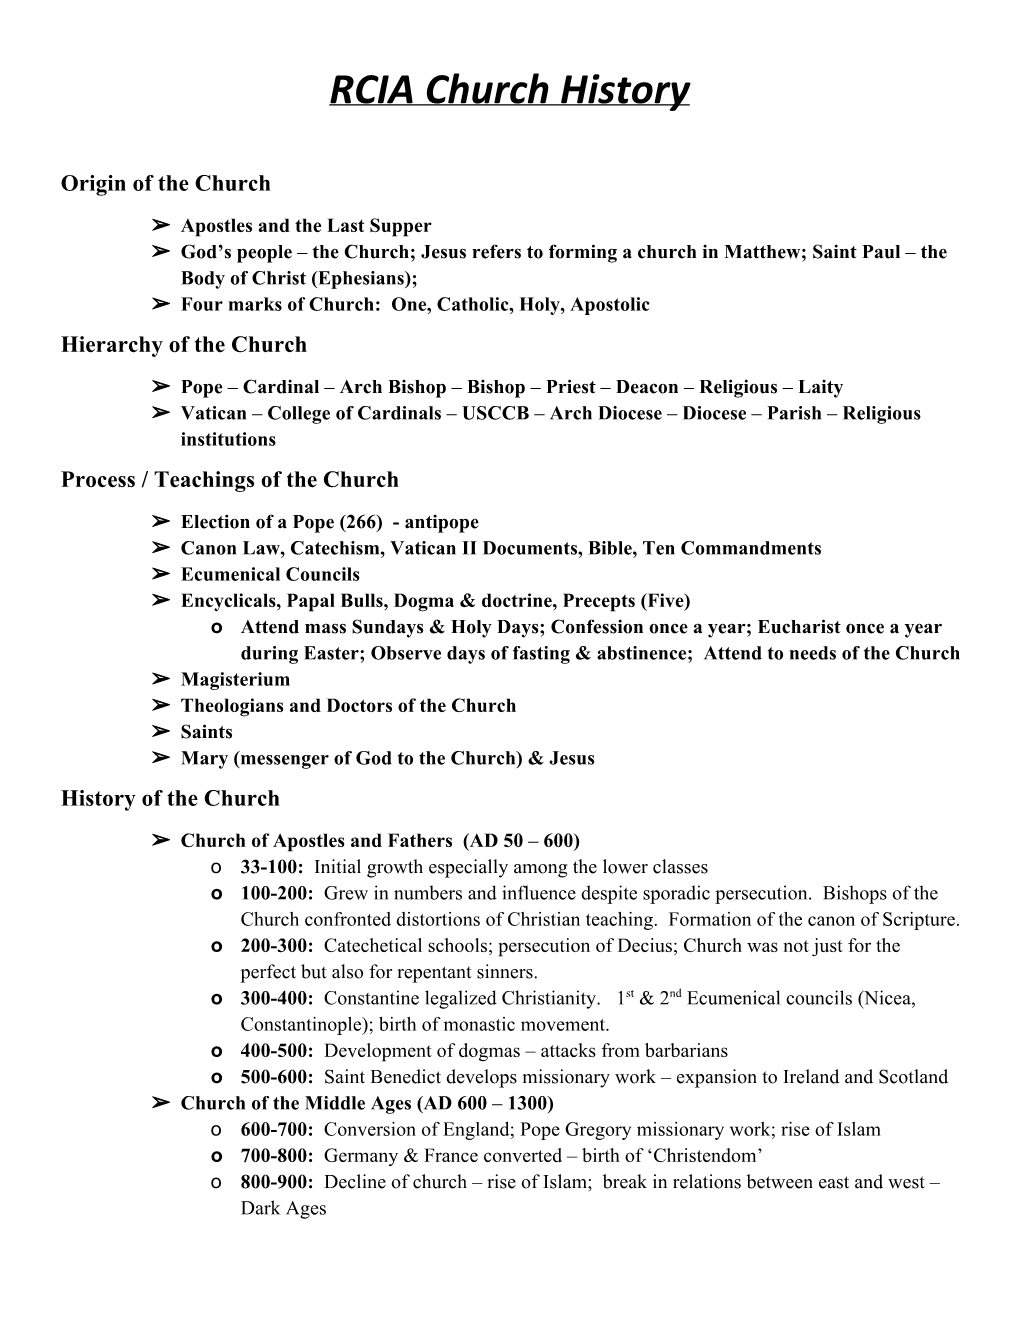 RCIA Church History